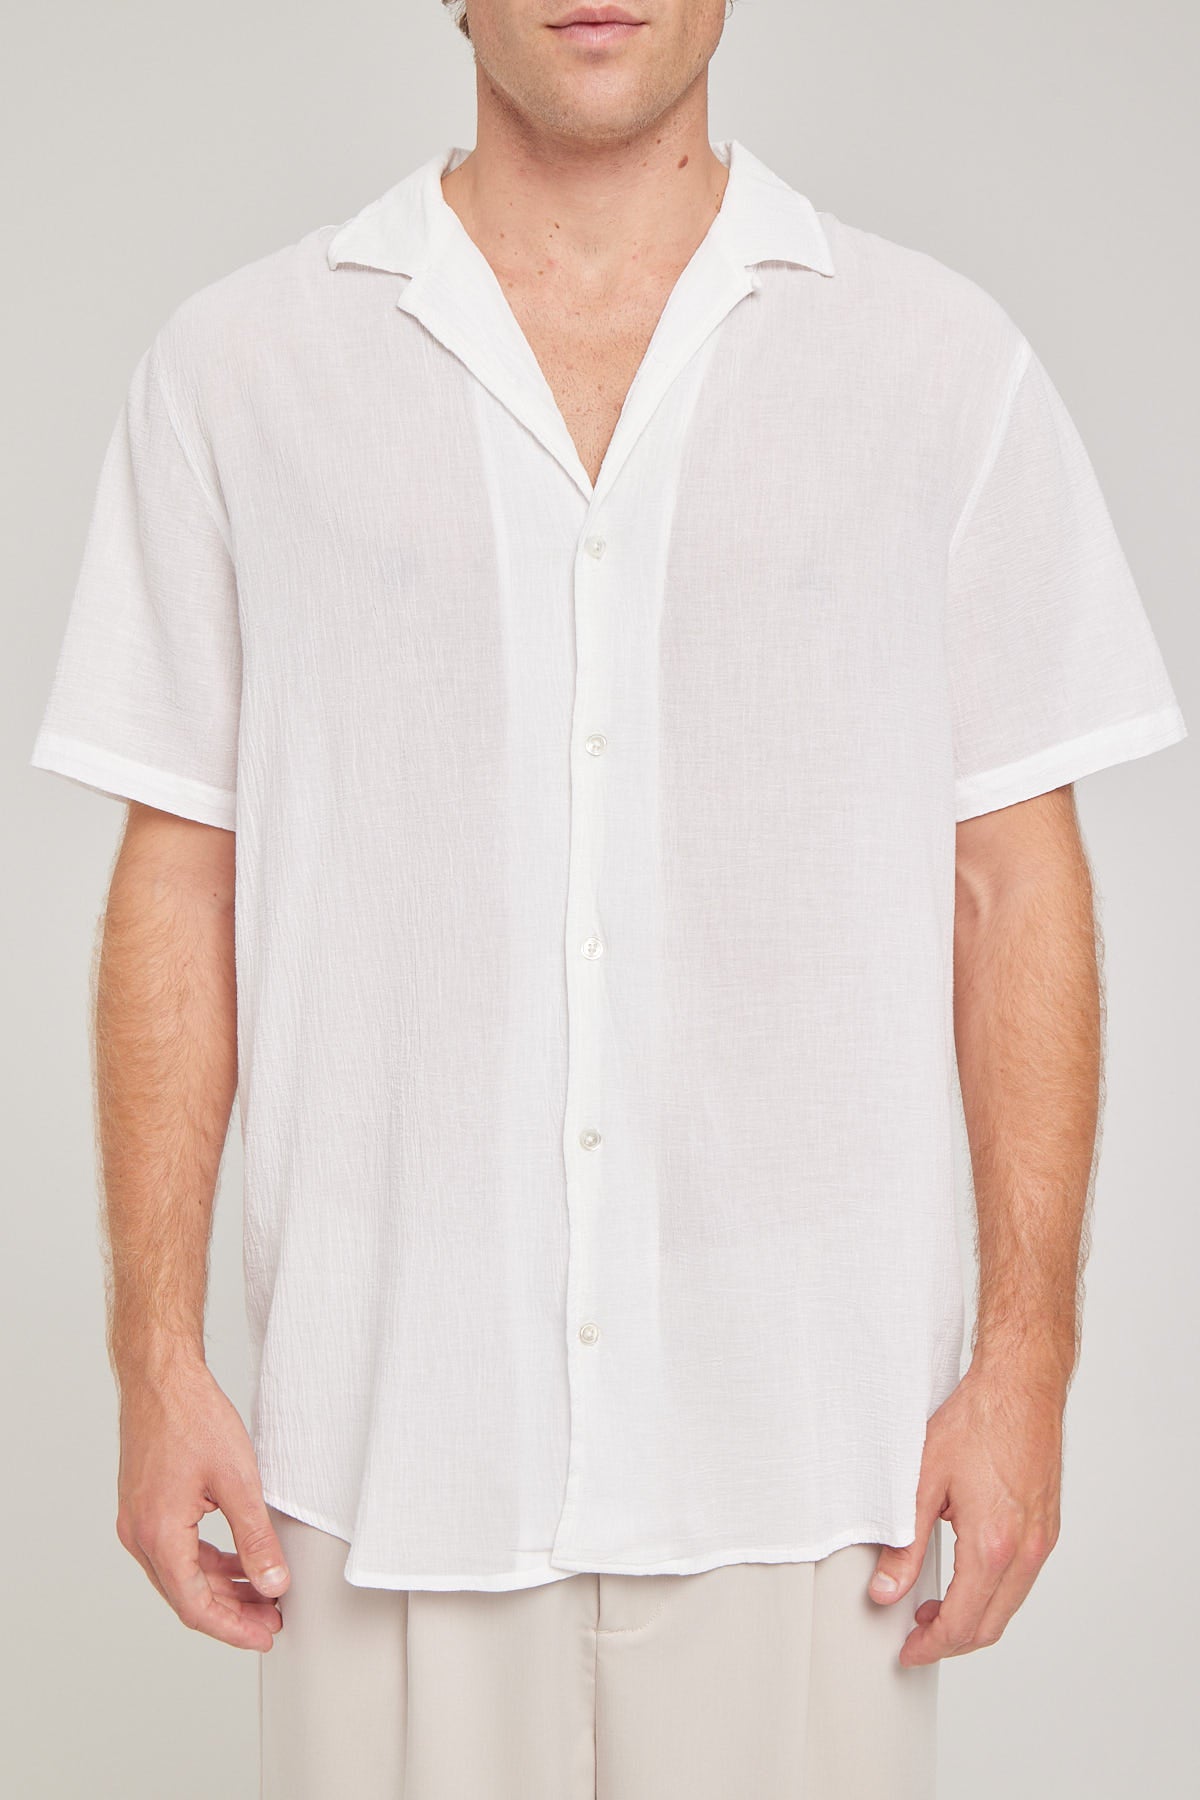 Academy Brand Bedford Shirt White – Universal Store